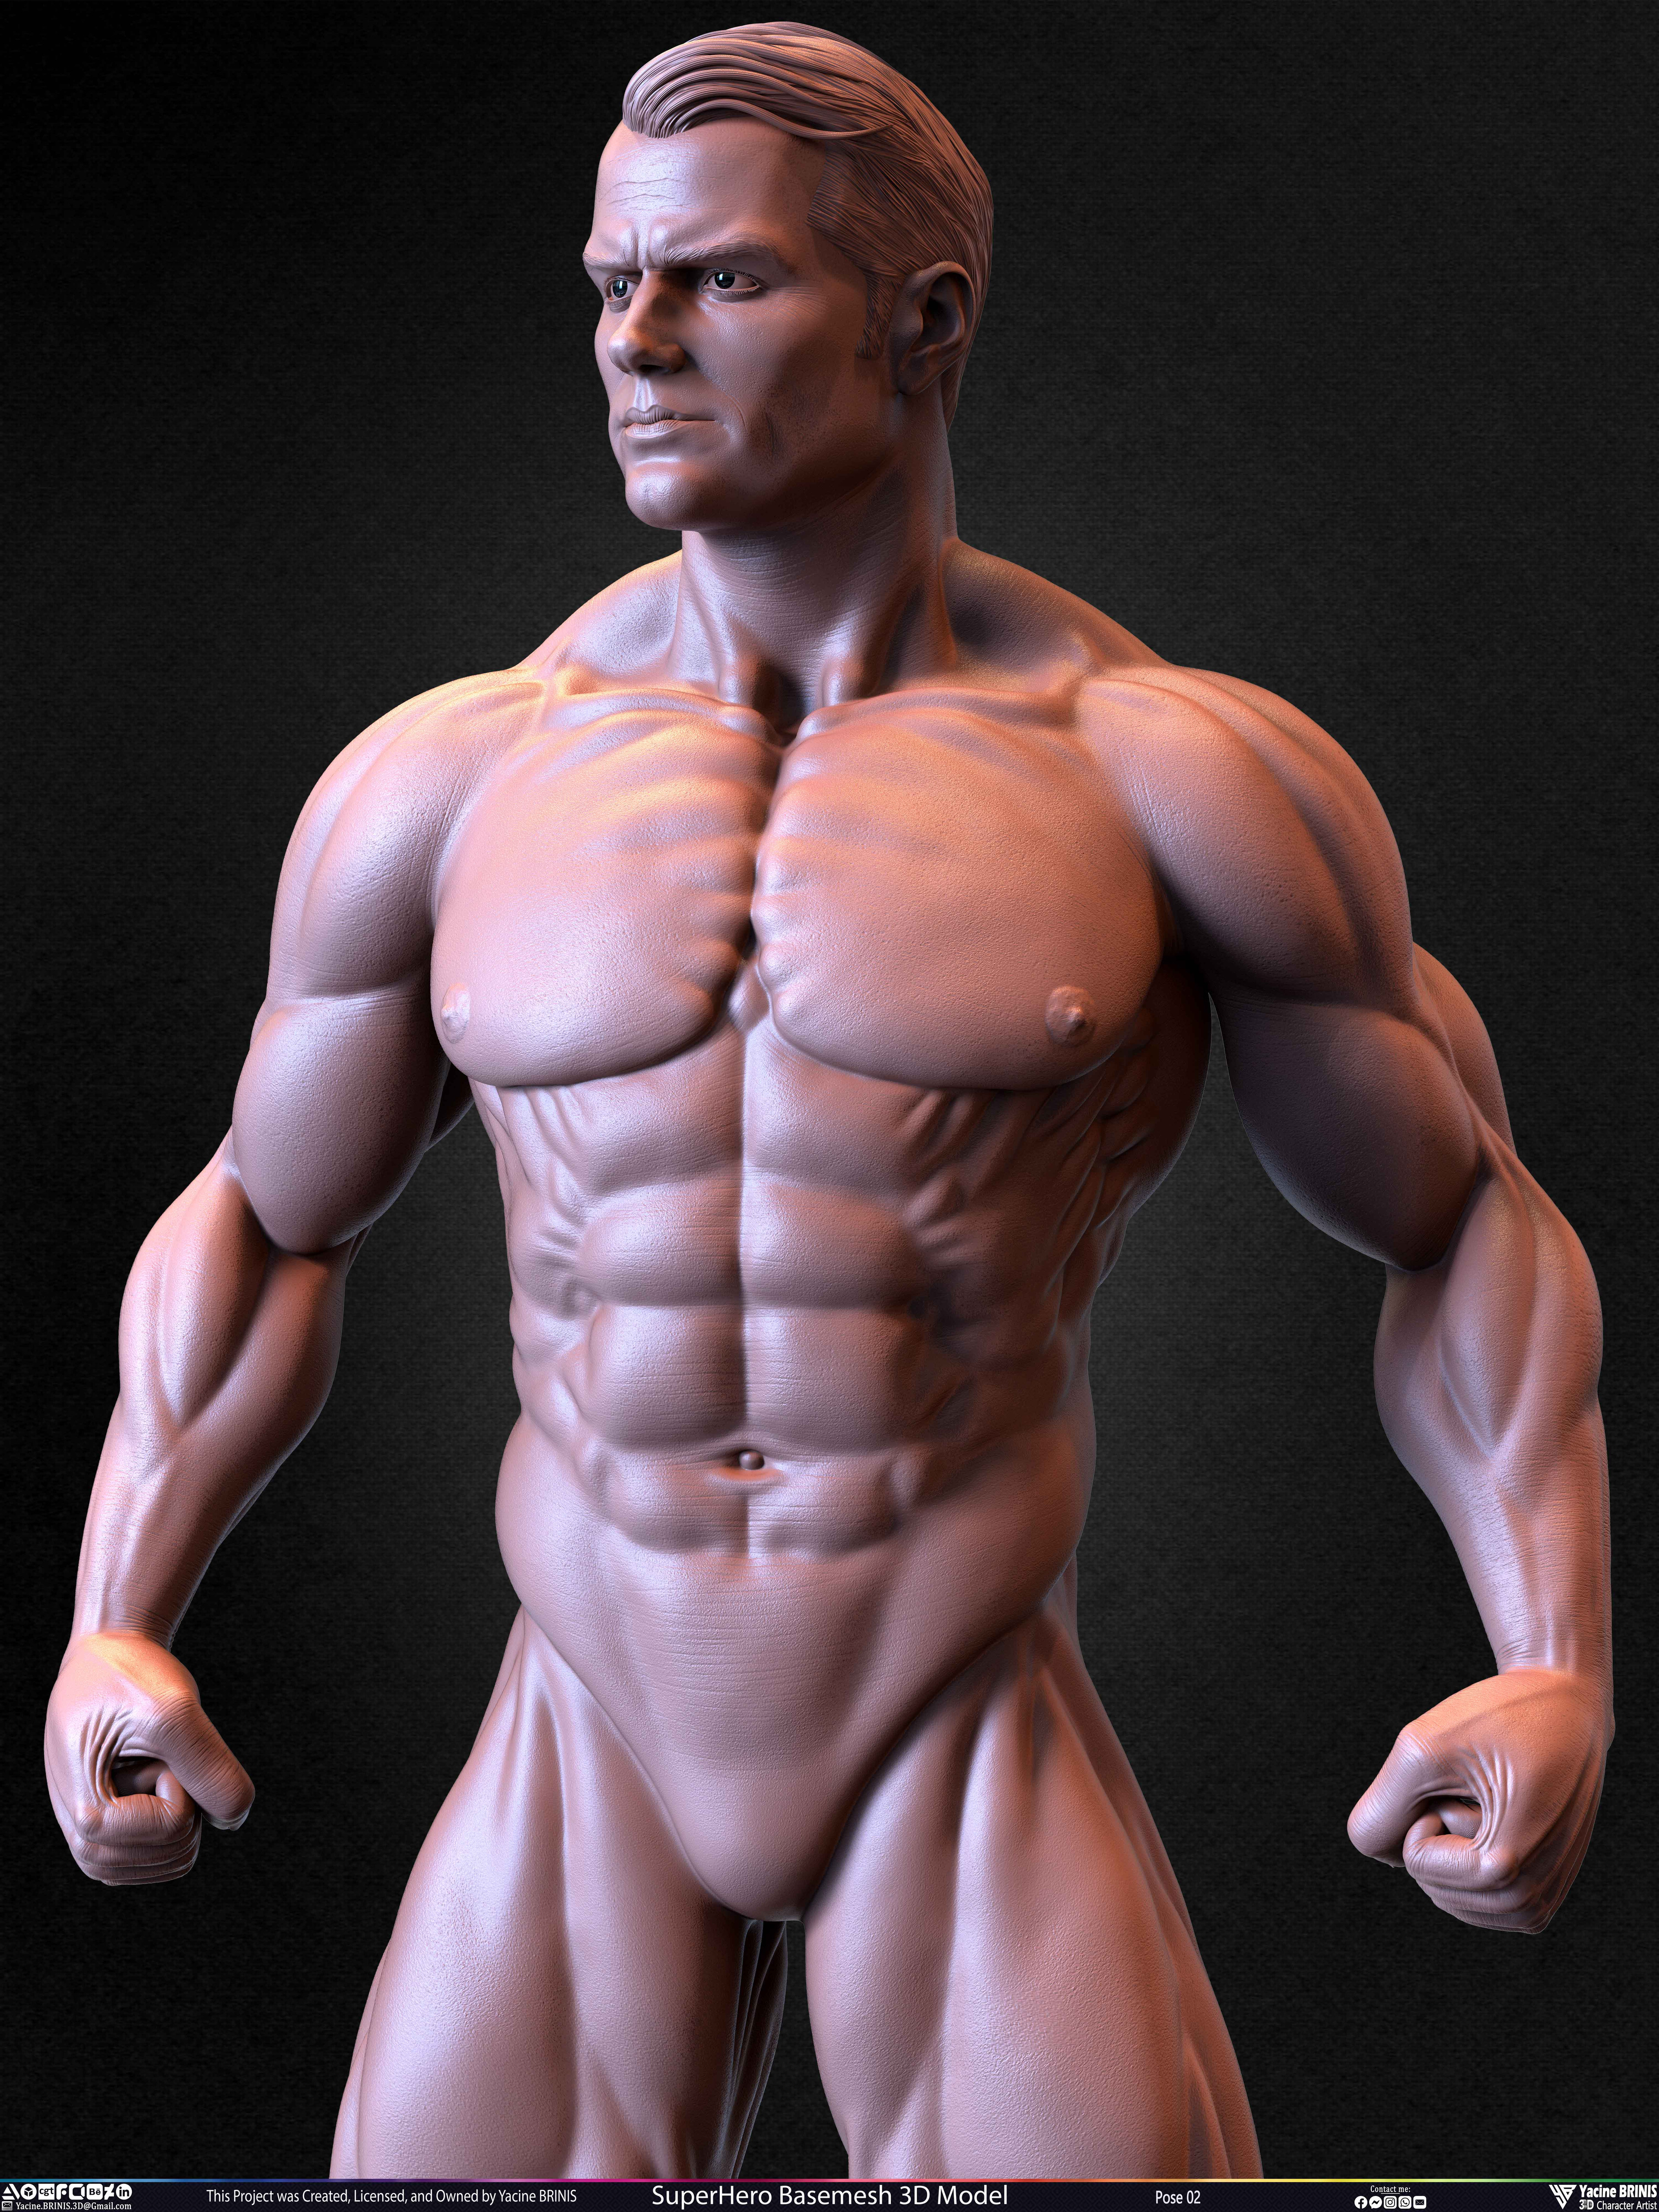 Super-Hero Basemesh 3D Model - Henry Cavill- Man of Steel - Superman - Pose 02 Sculpted by Yacine BRINIS Set 025